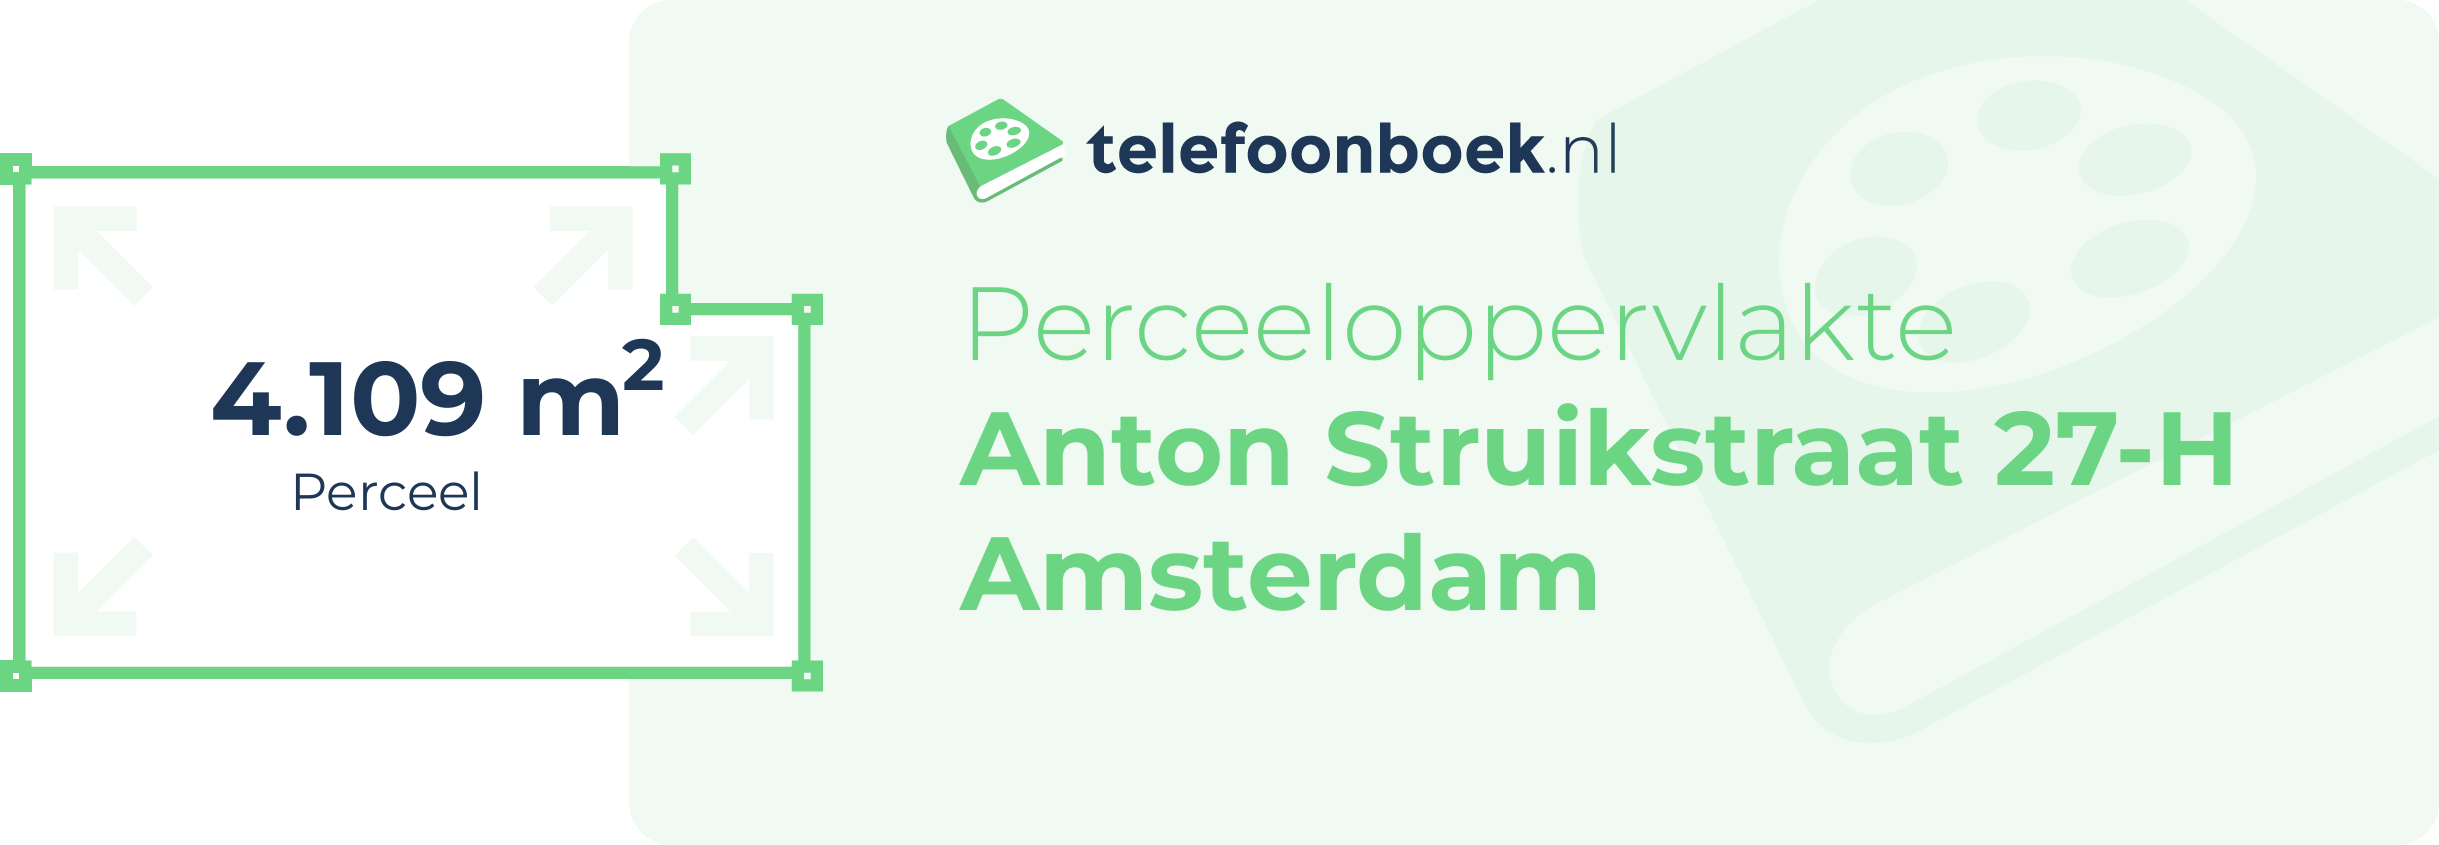 Perceeloppervlakte Anton Struikstraat 27-H Amsterdam